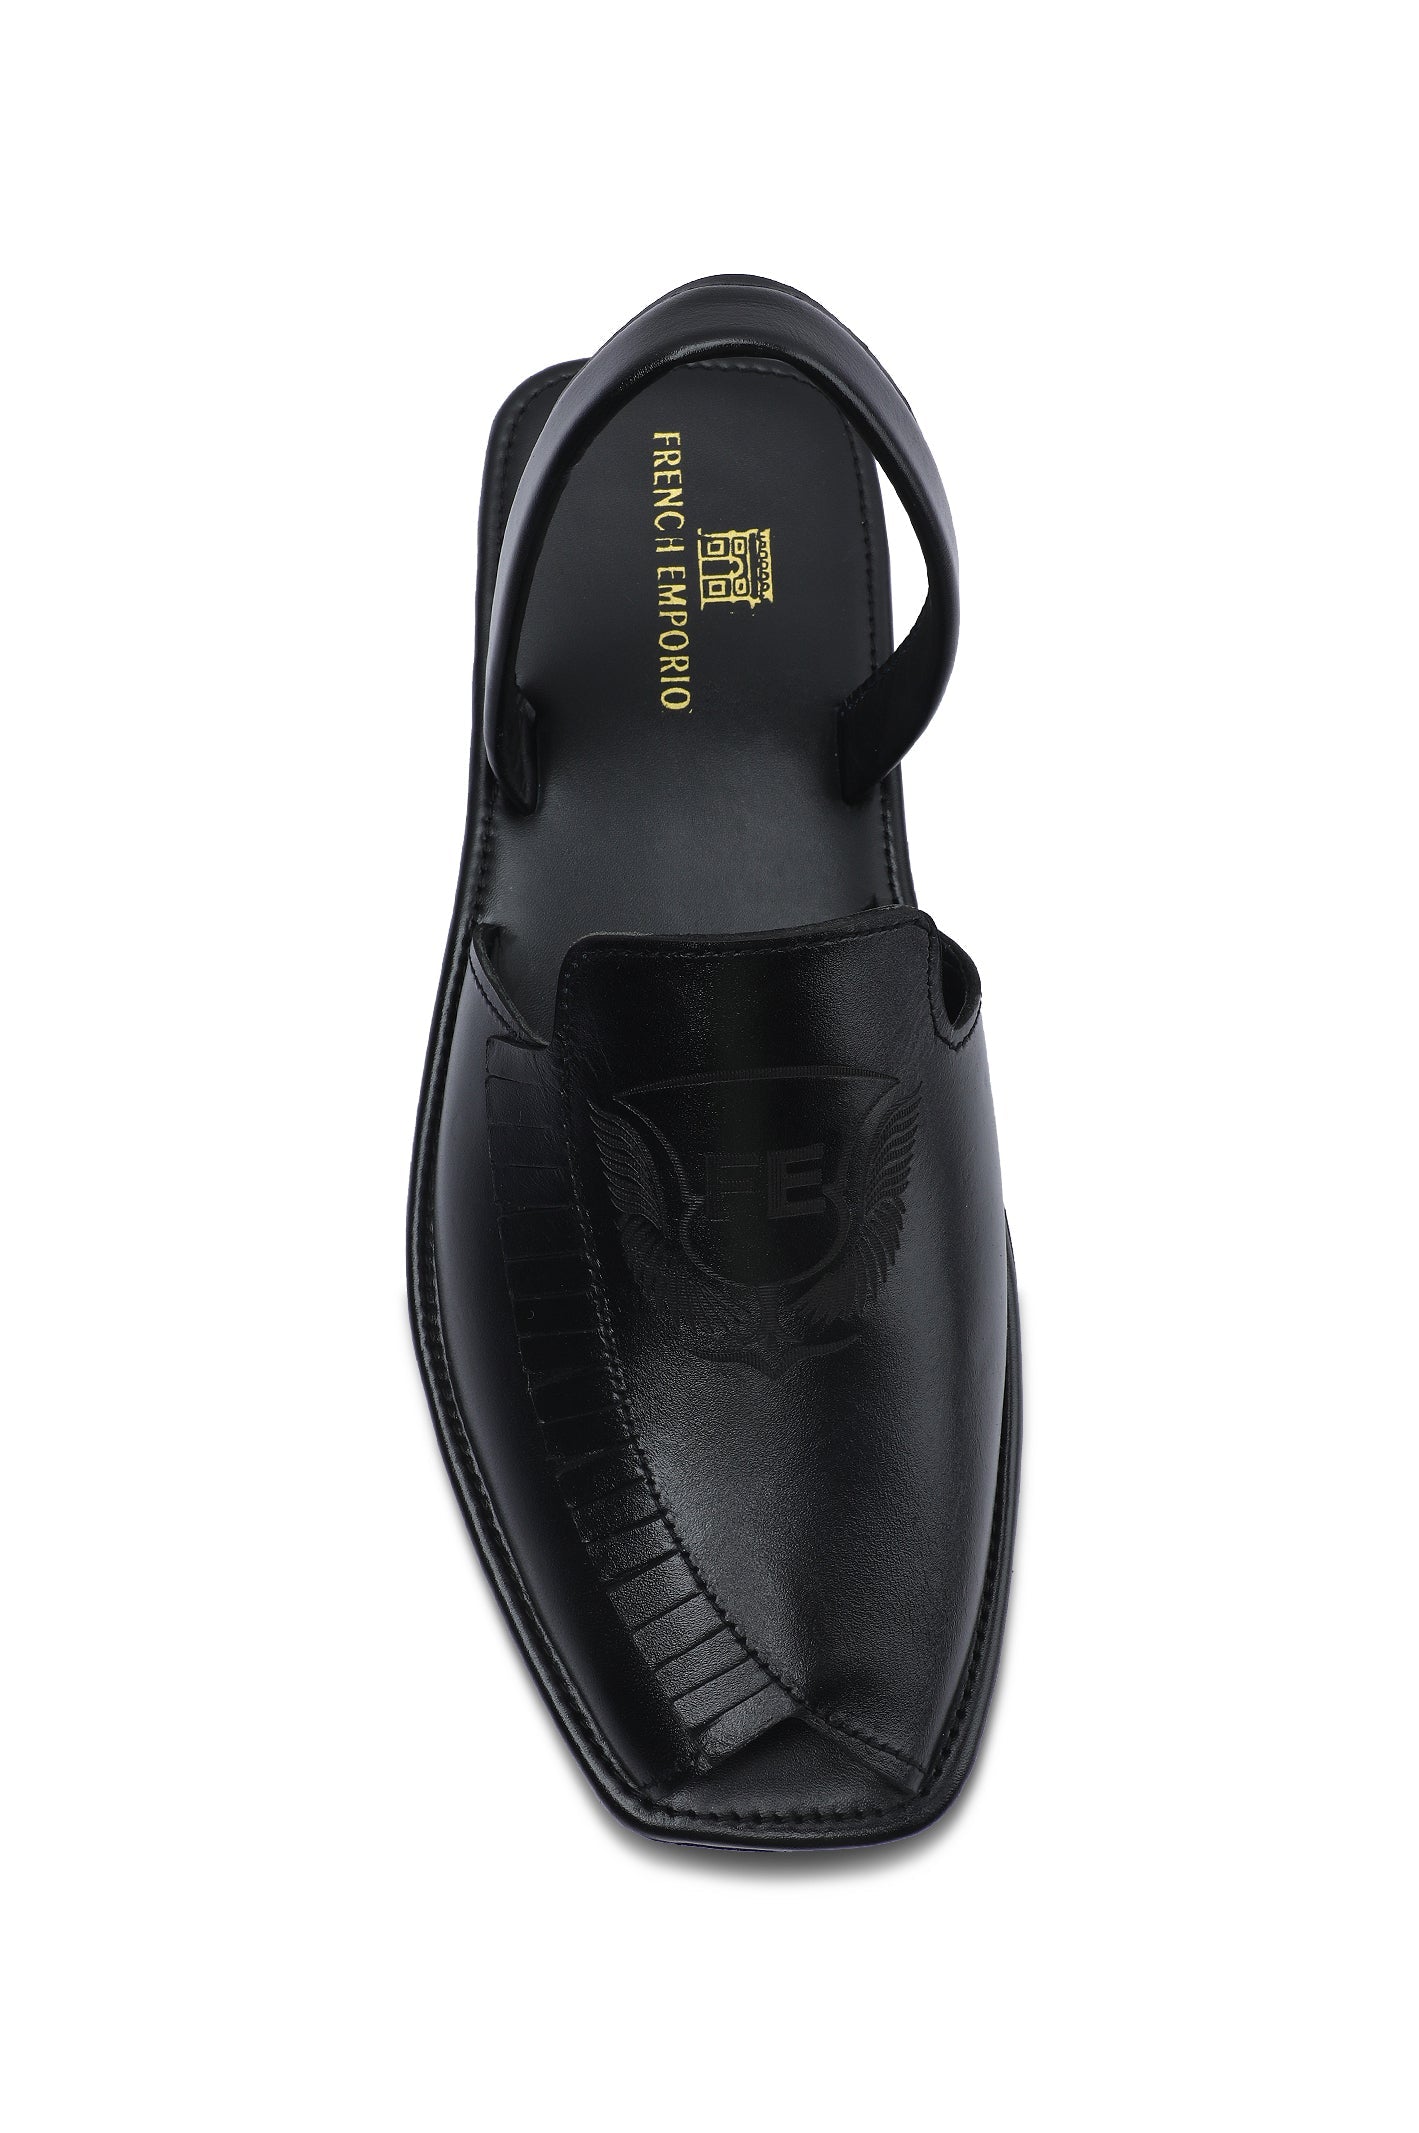 French Emporio Men's Sandal SKU: SLD-0038-BLACK - Diners